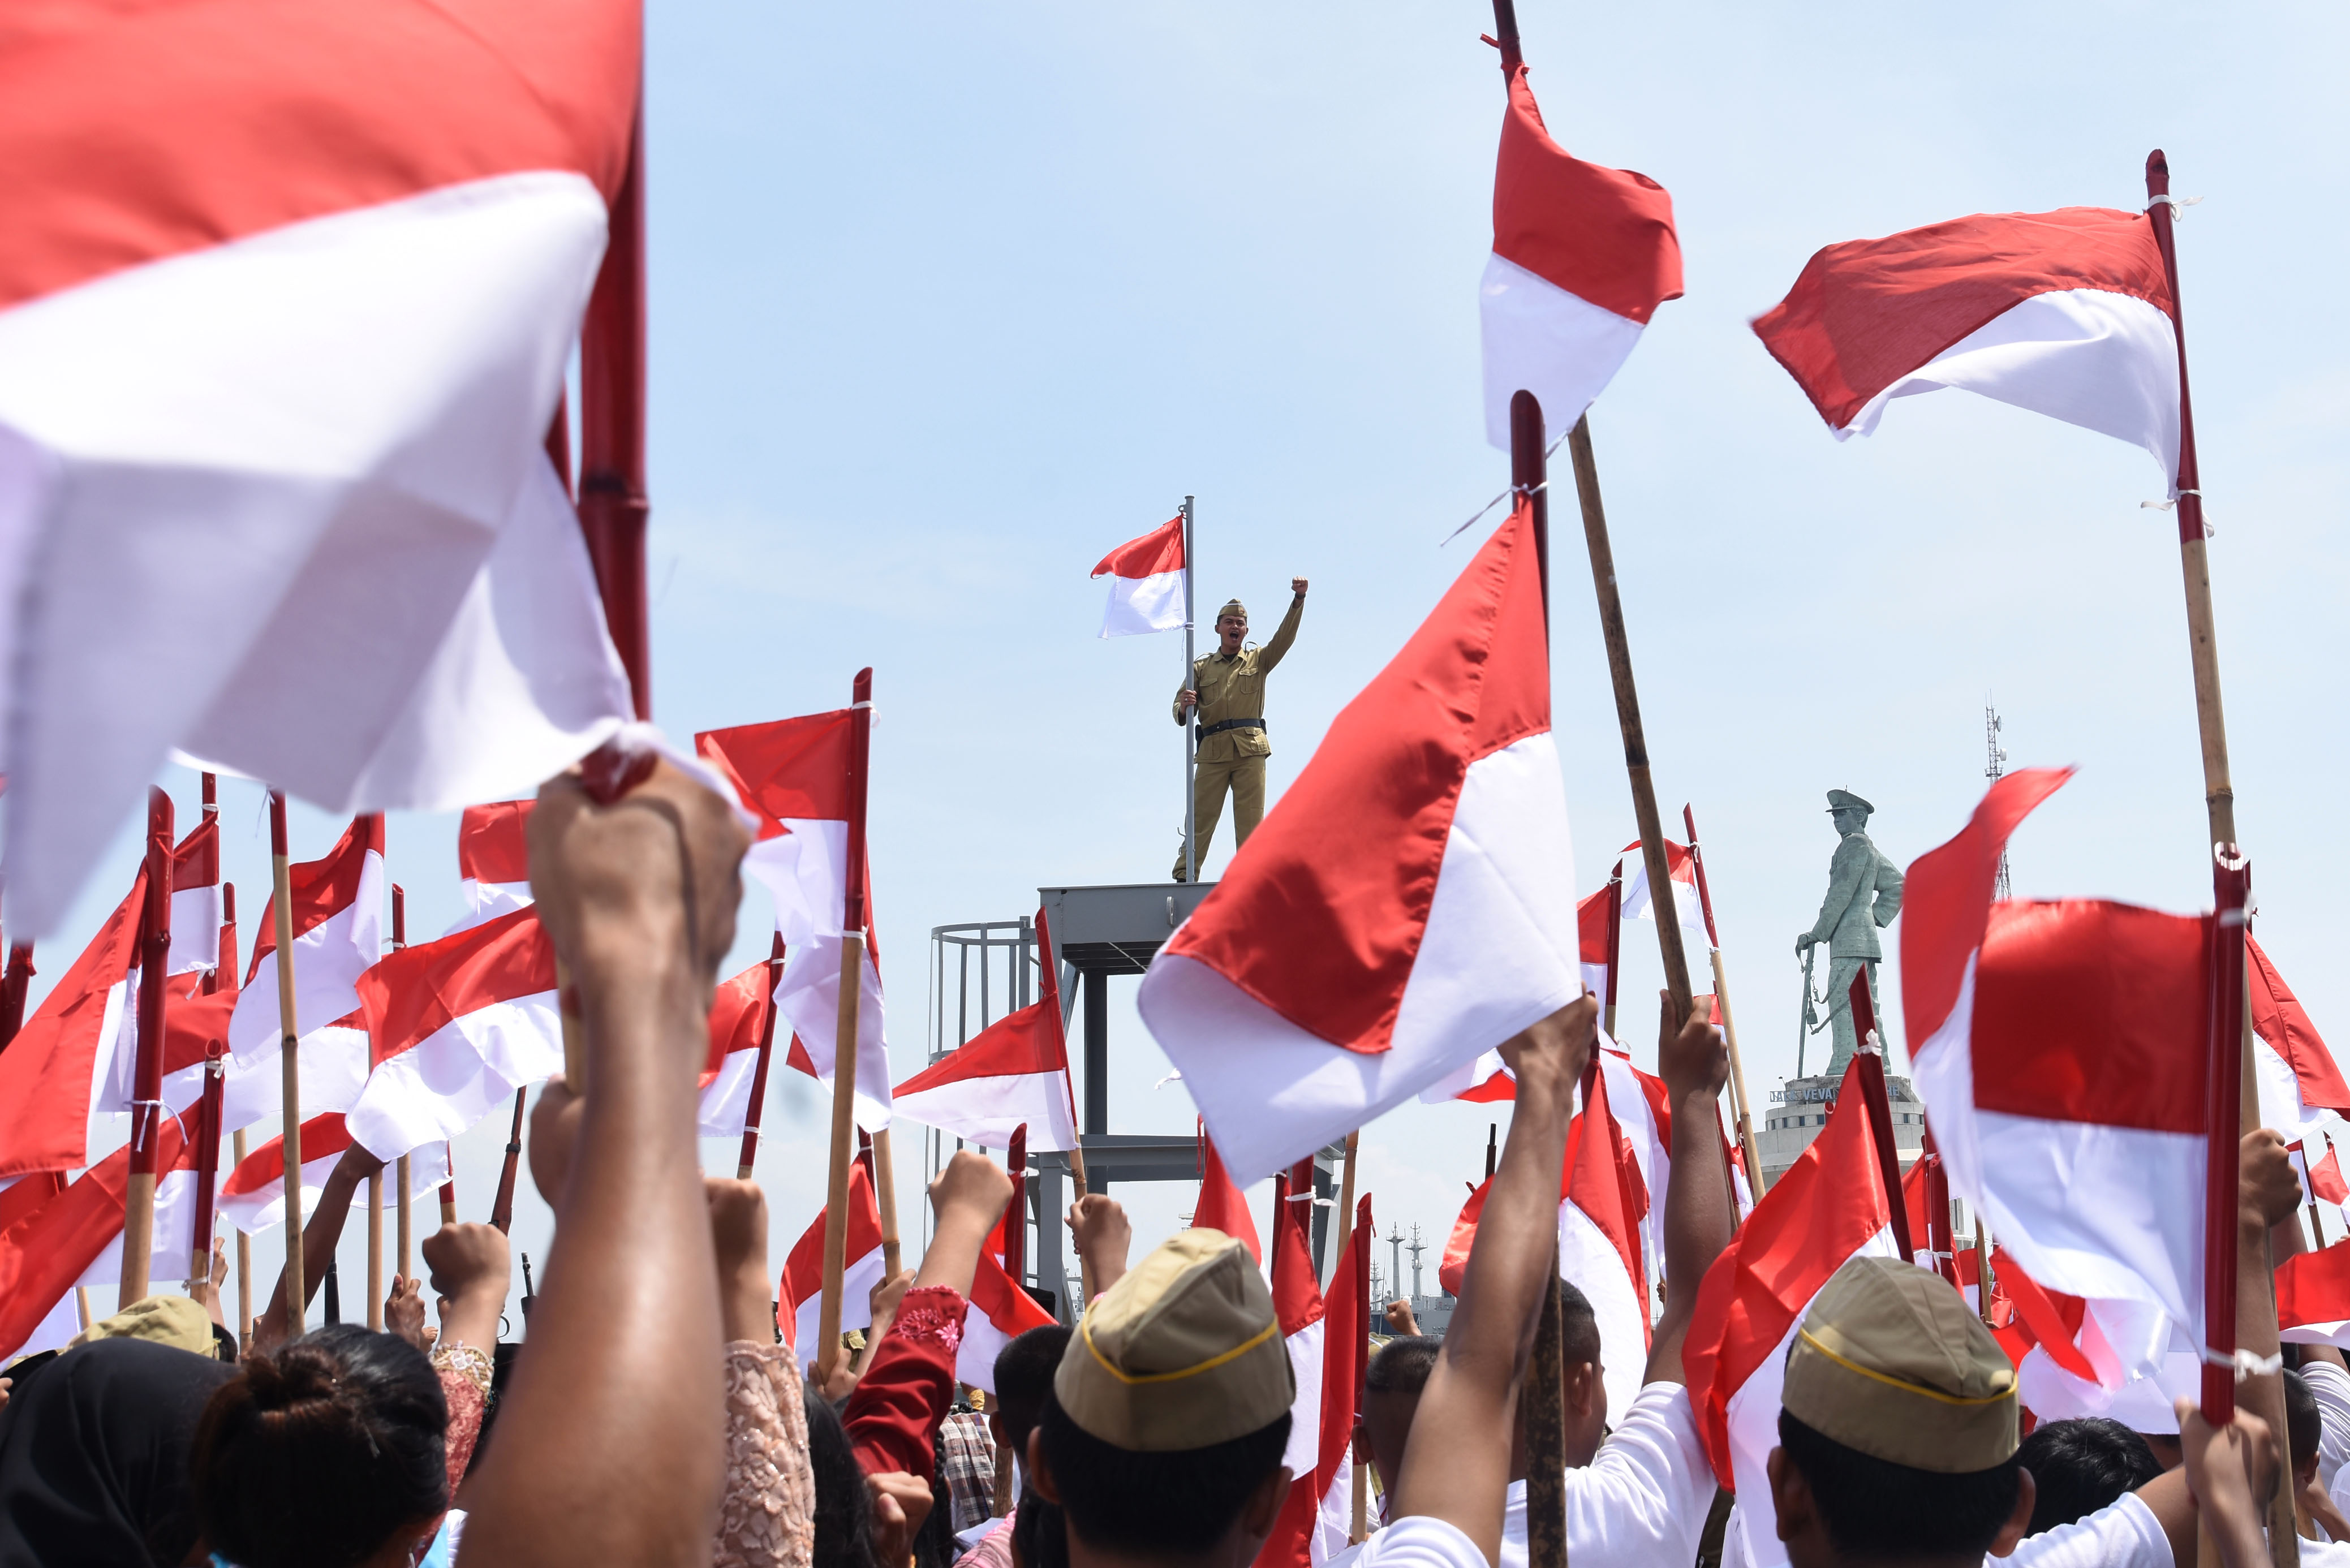 Tujuan Negara untuk Melindungi segenap bangsa indonesia